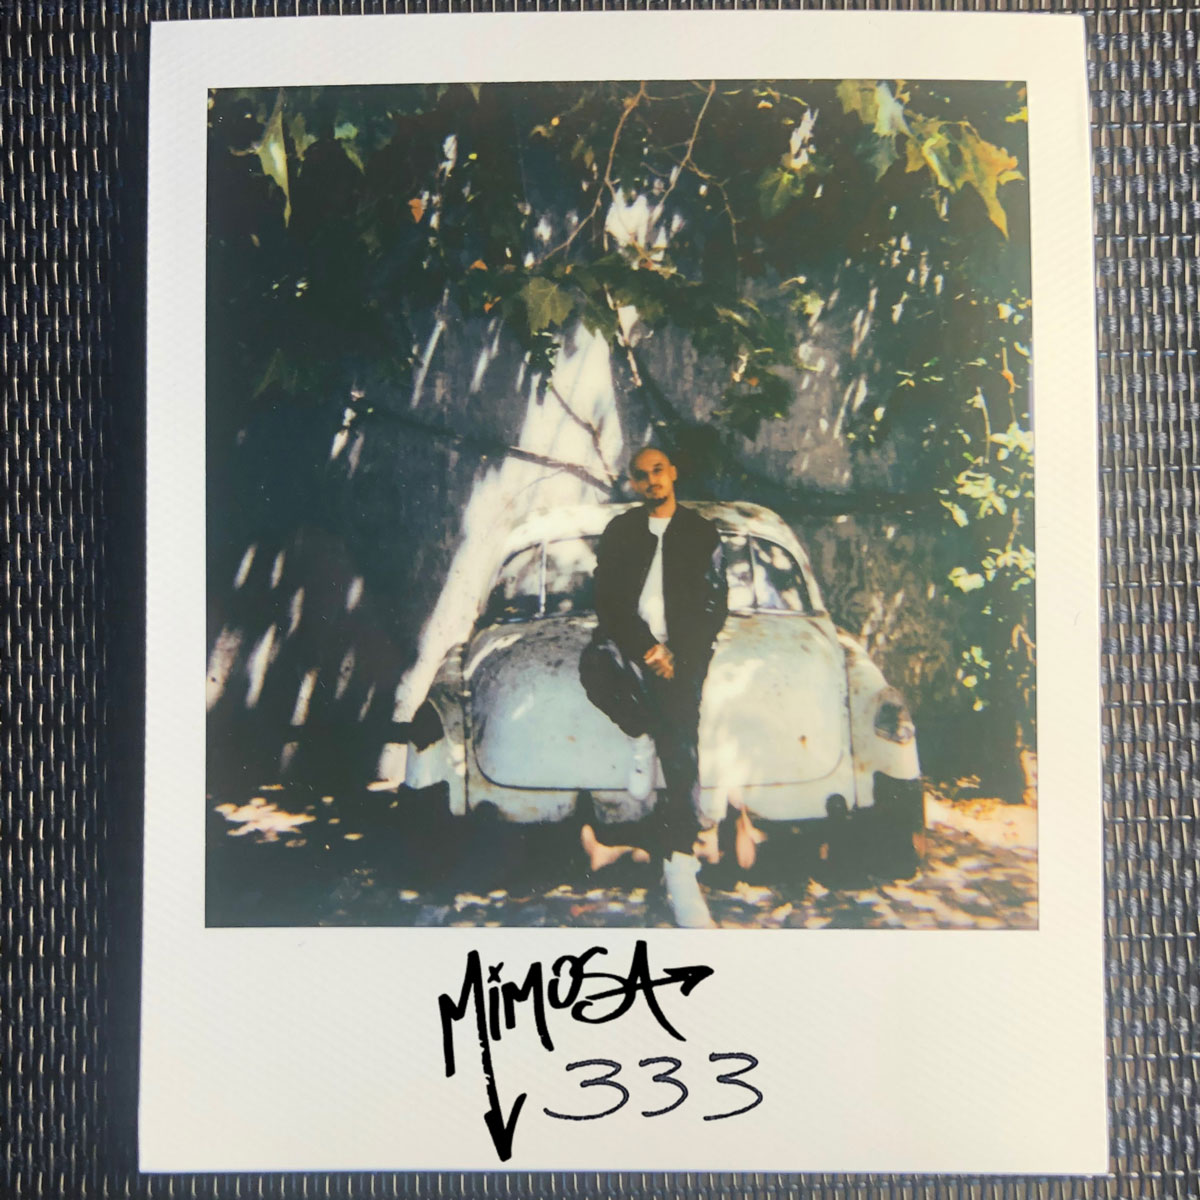 Mimosa - 333